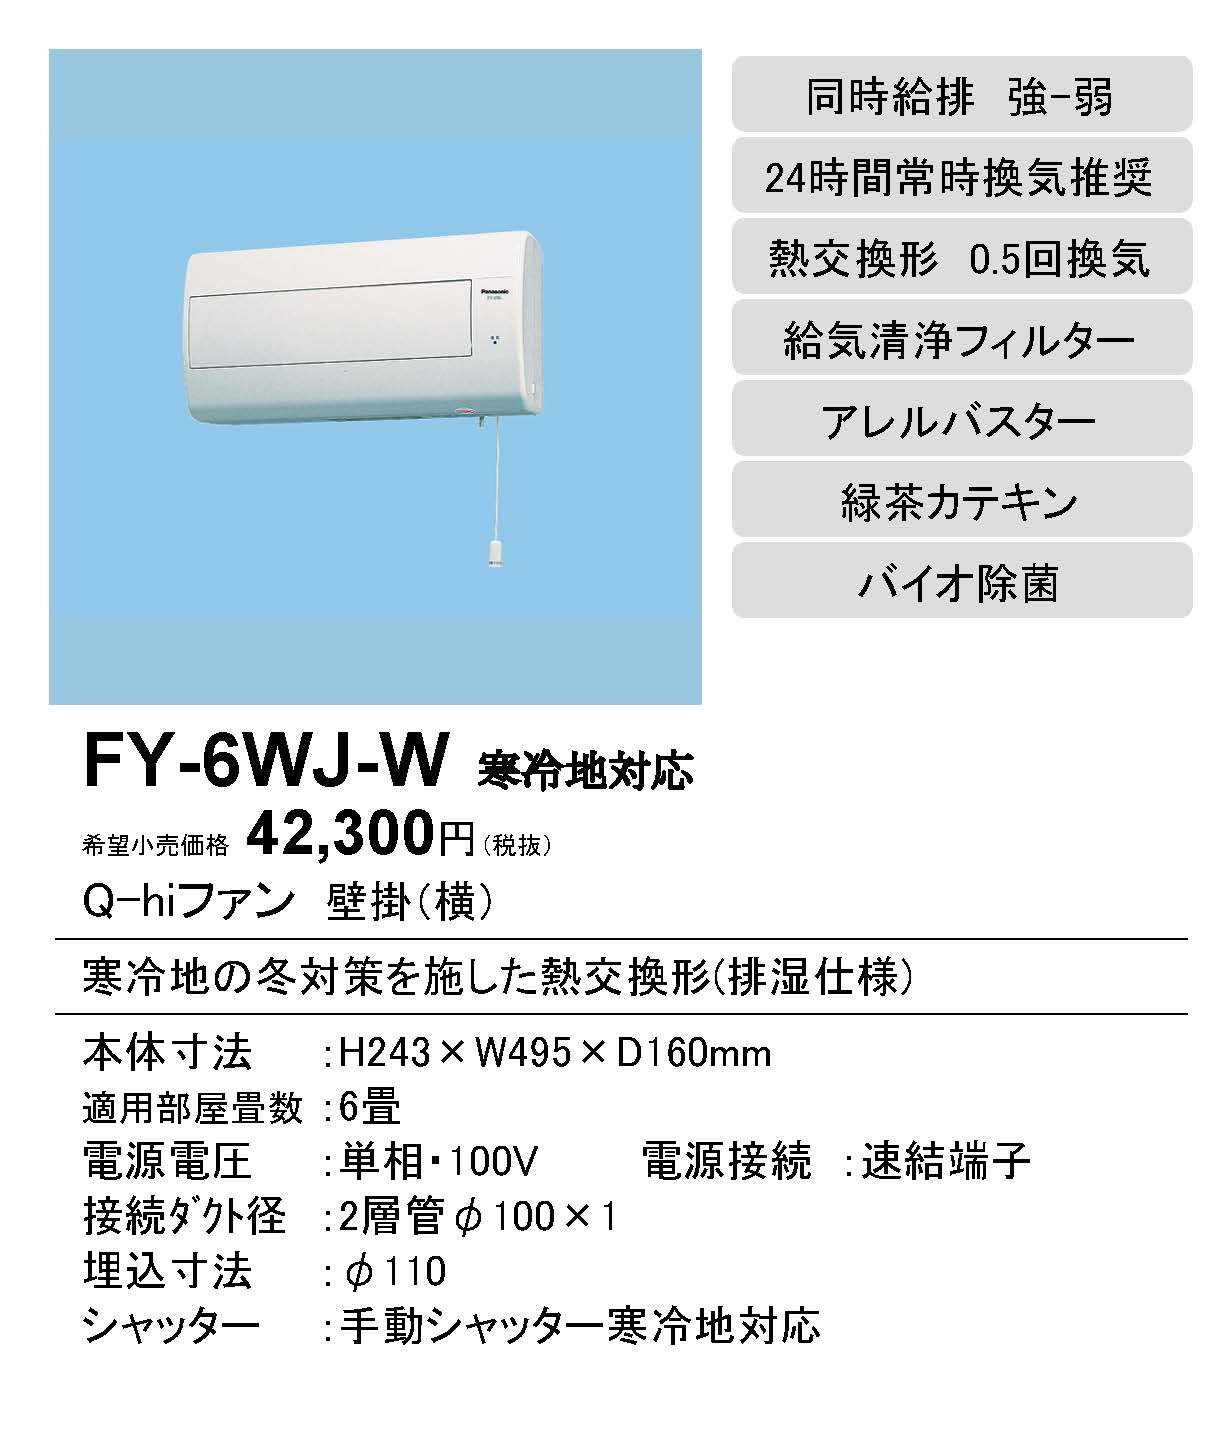 FY-6WJ-W | 換気扇 | パナソニック Panasonic Q-hiファン壁掛形・1